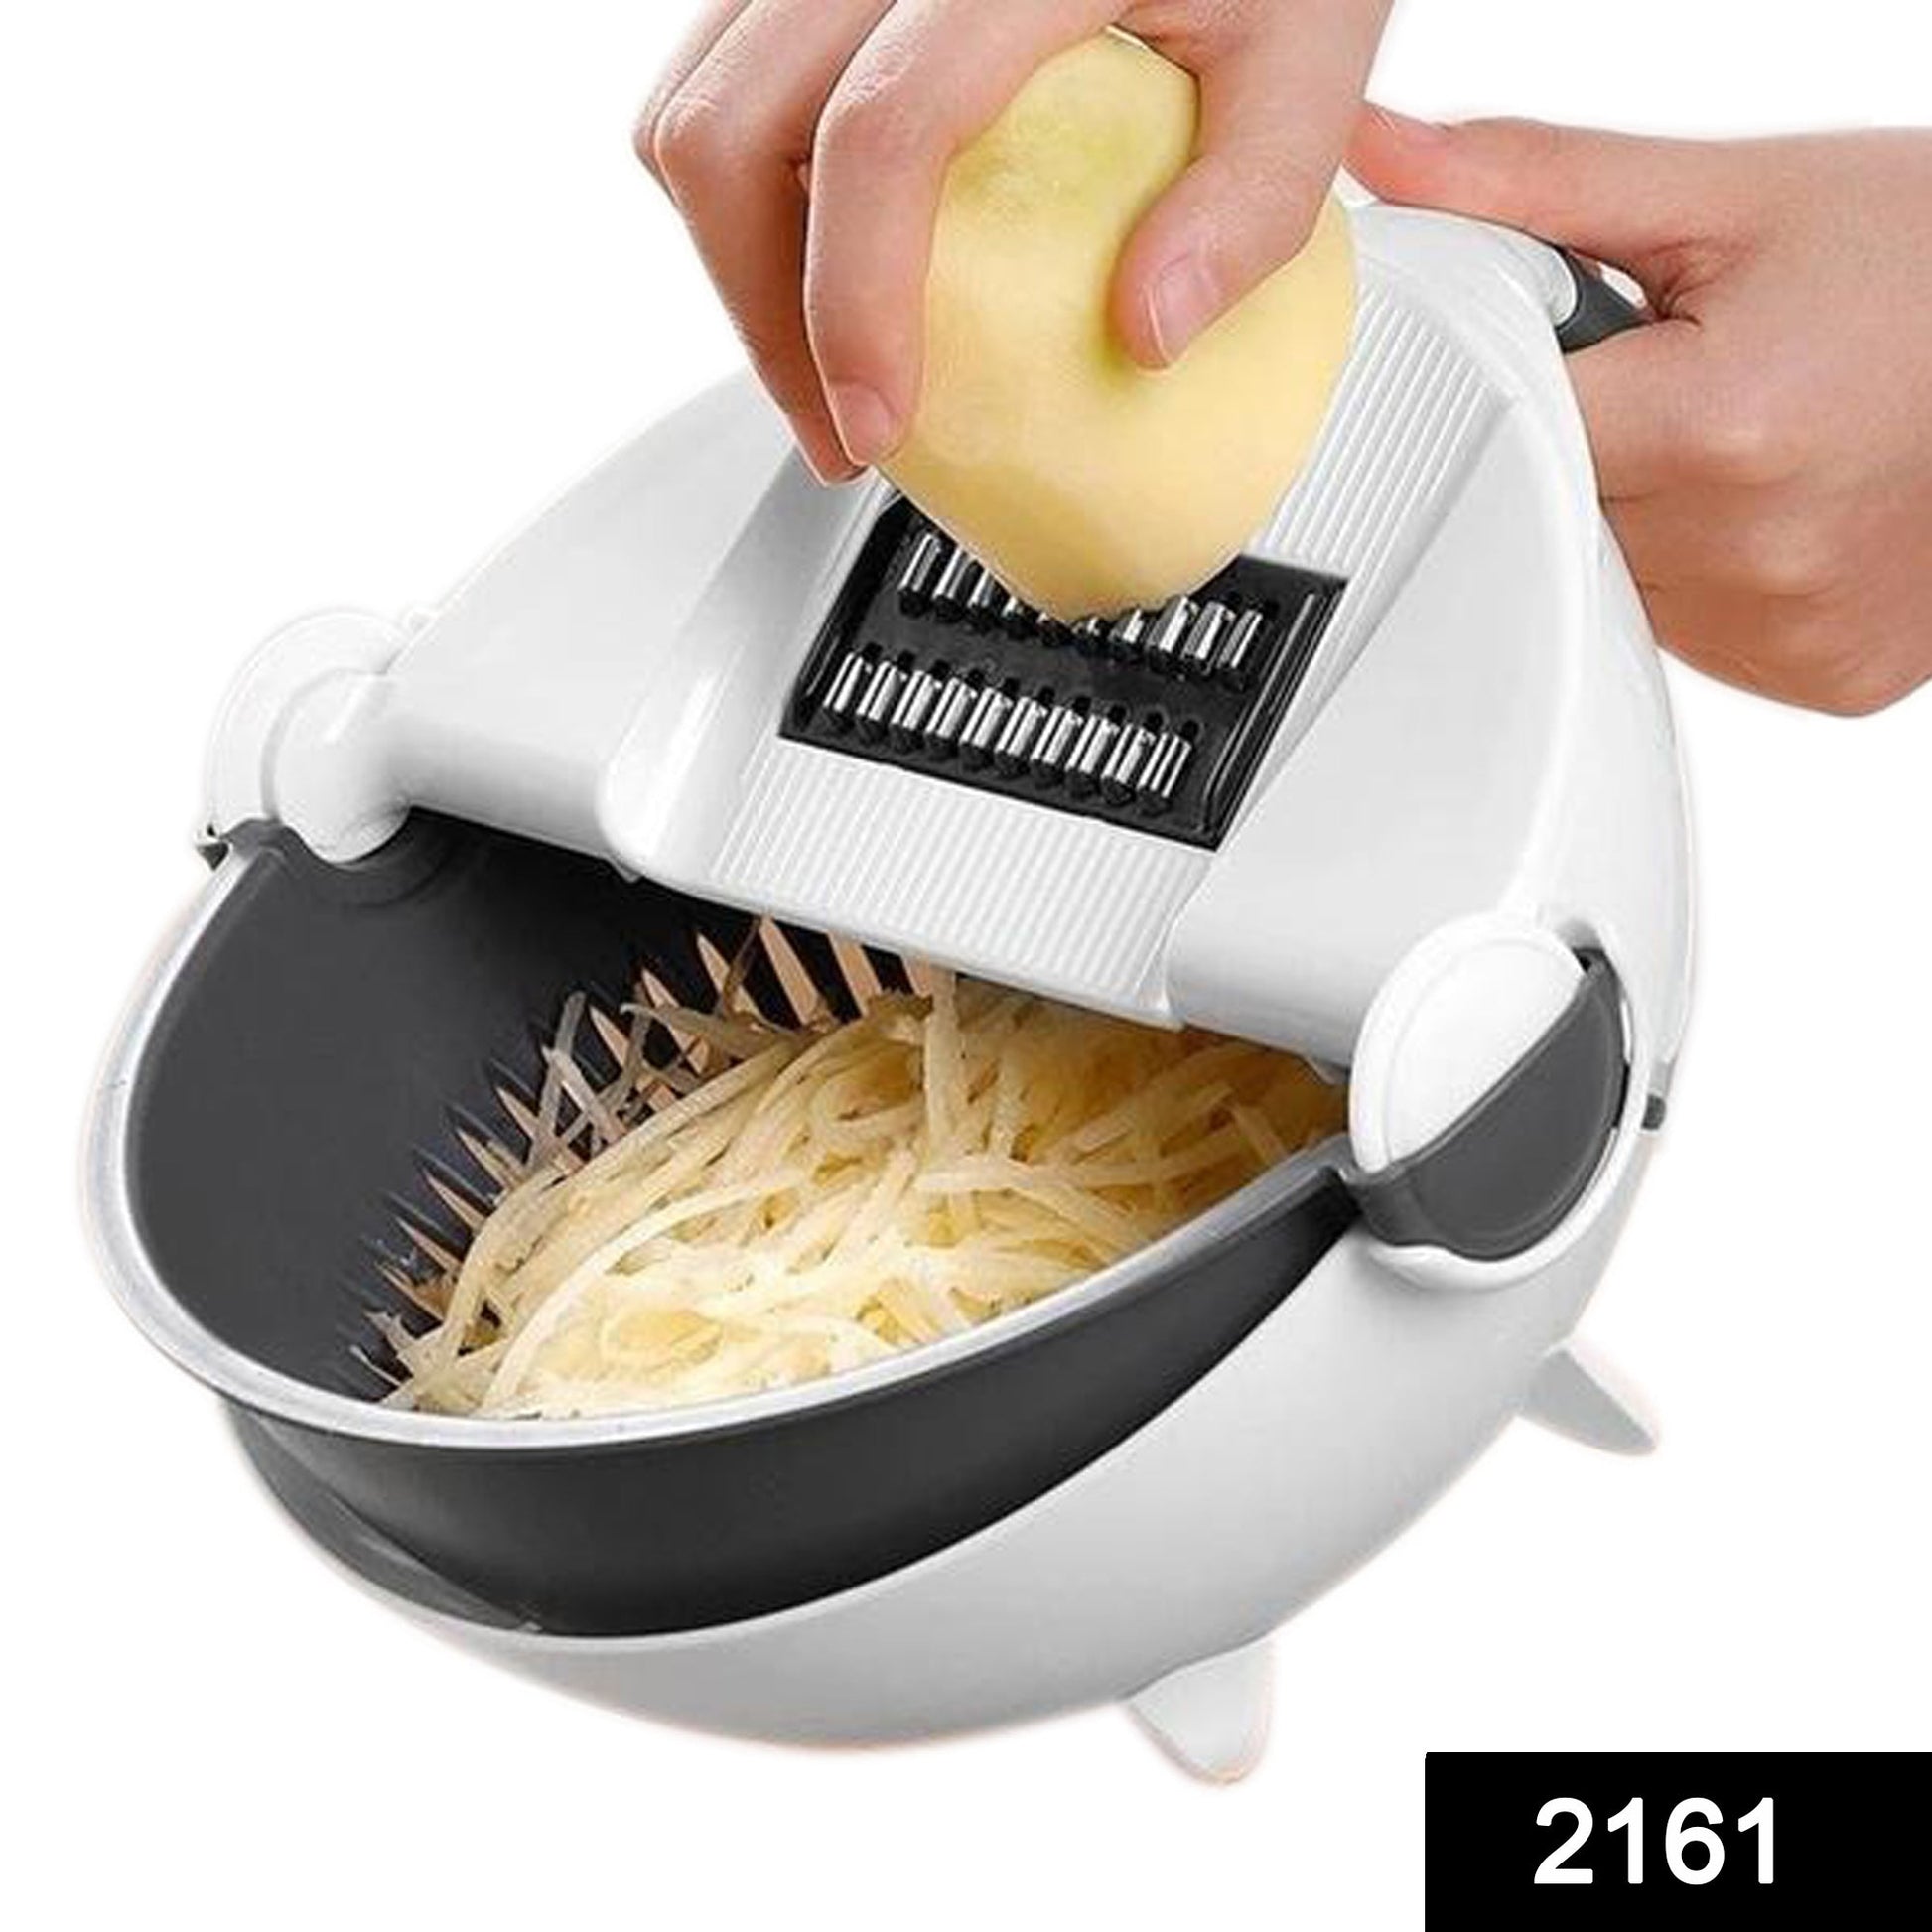 2161 10 in 1 Multifunctional Vegetable Fruits Cutter/Slicer Shredder with Rotating Drain Basket 